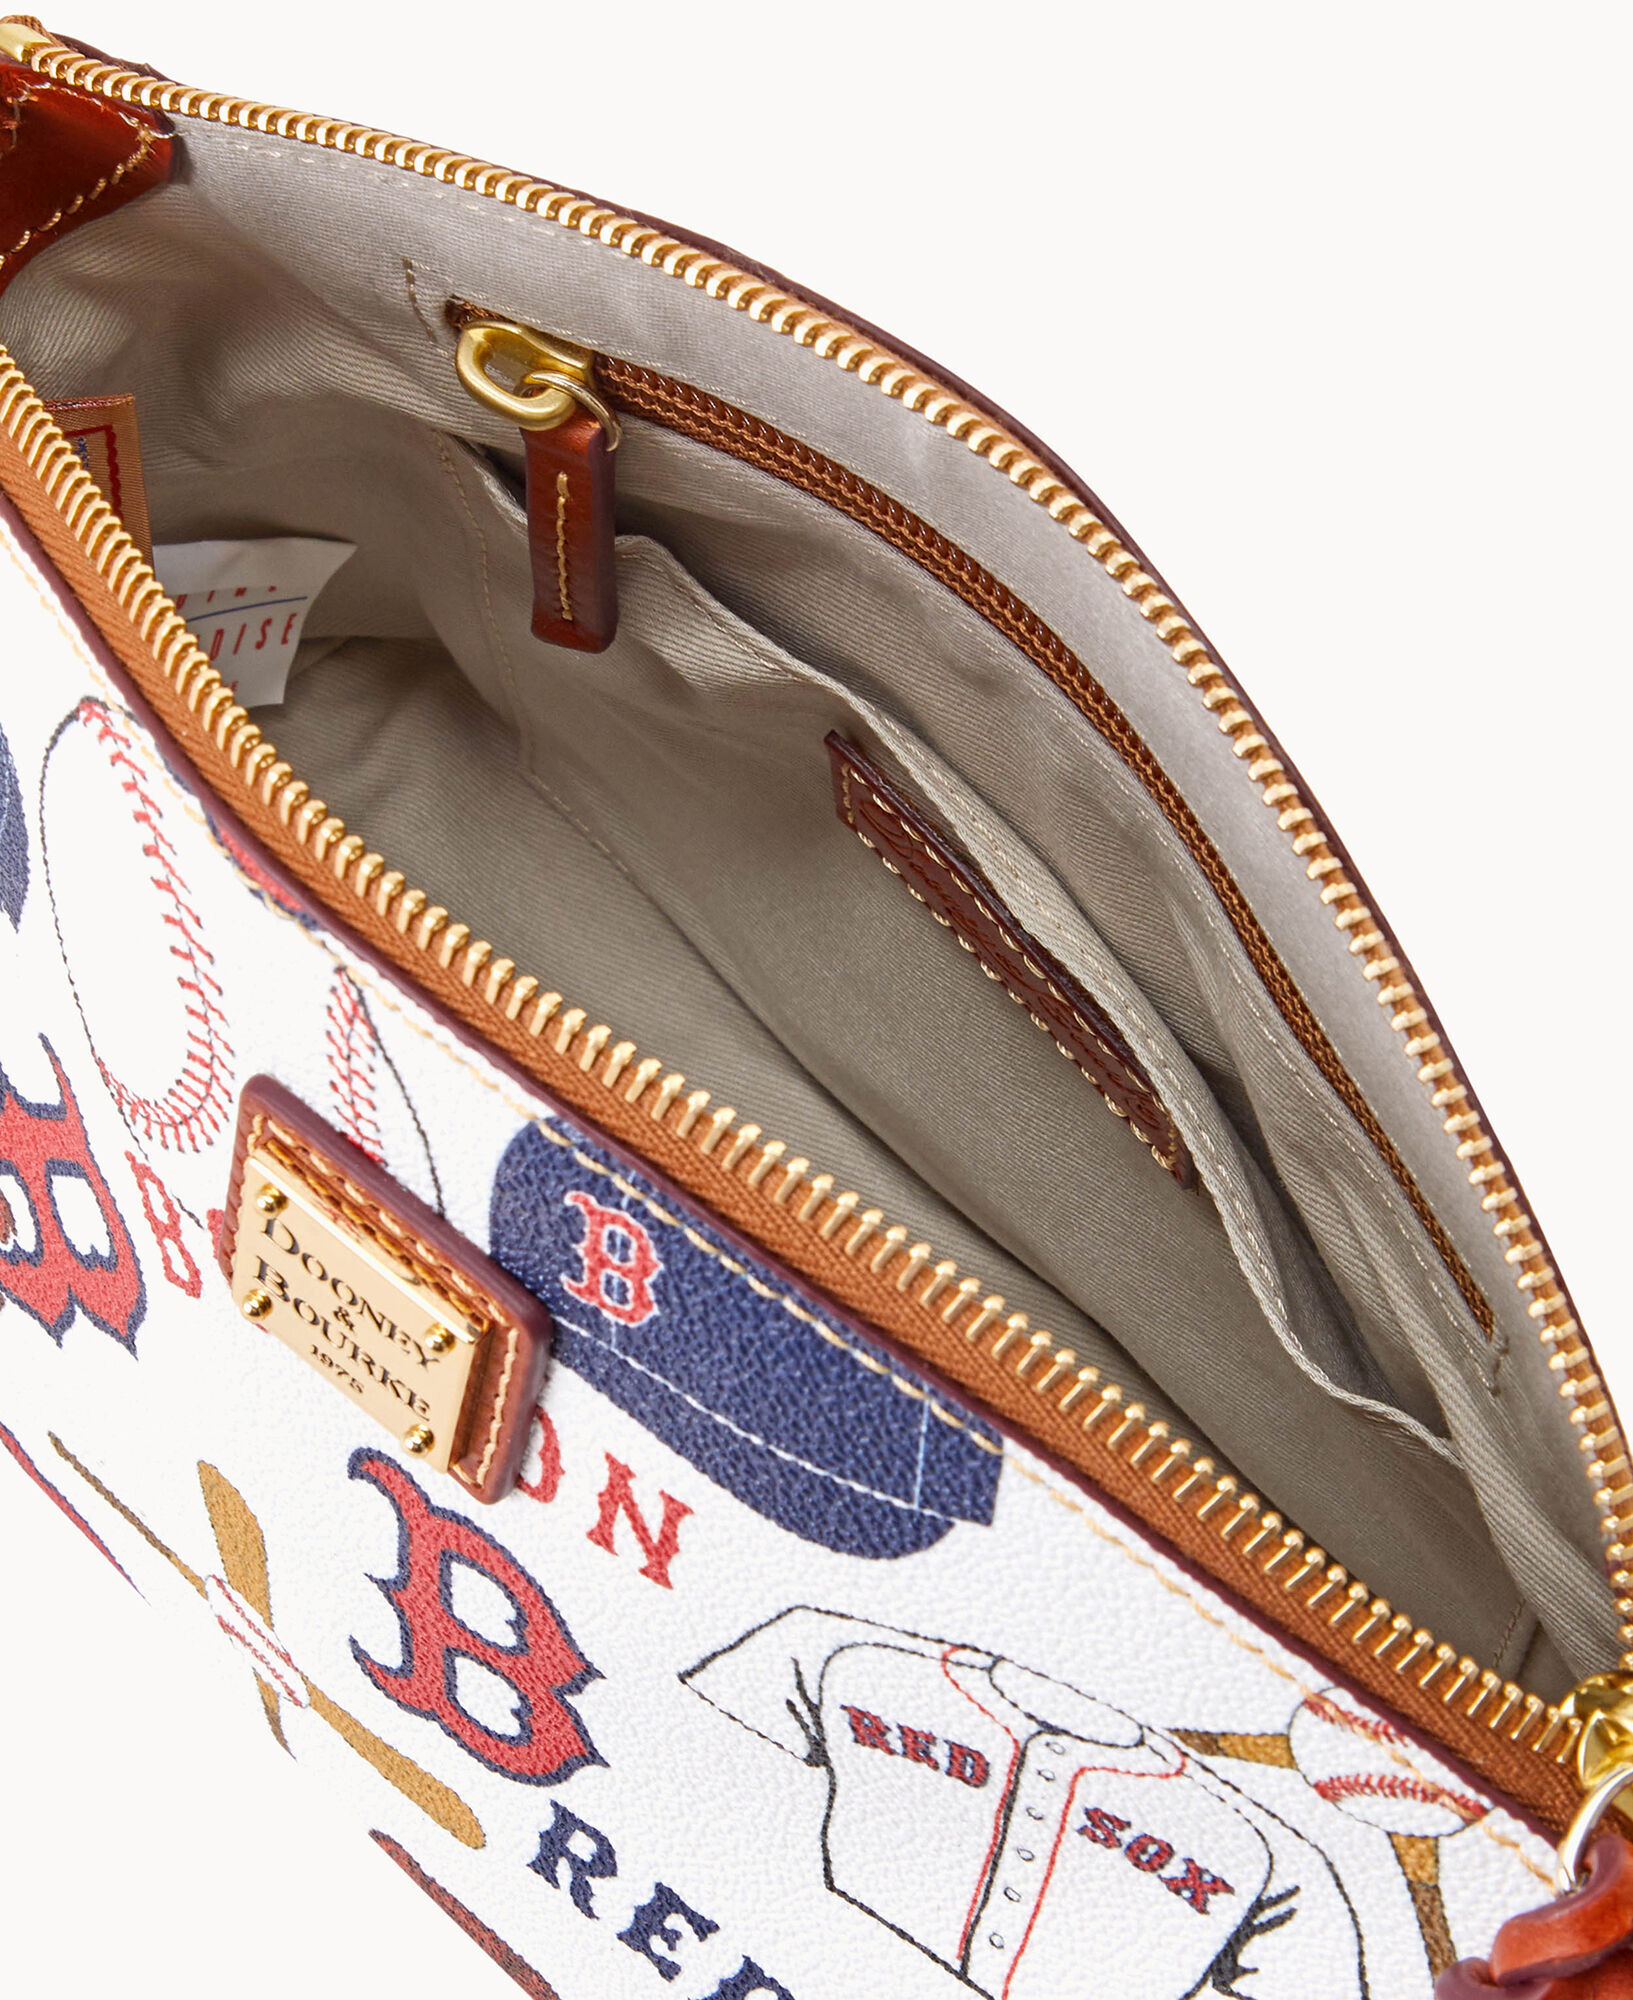 Dooney & Bourke MLB Boston Red Sox Domed Crossbody Shoulder Bag